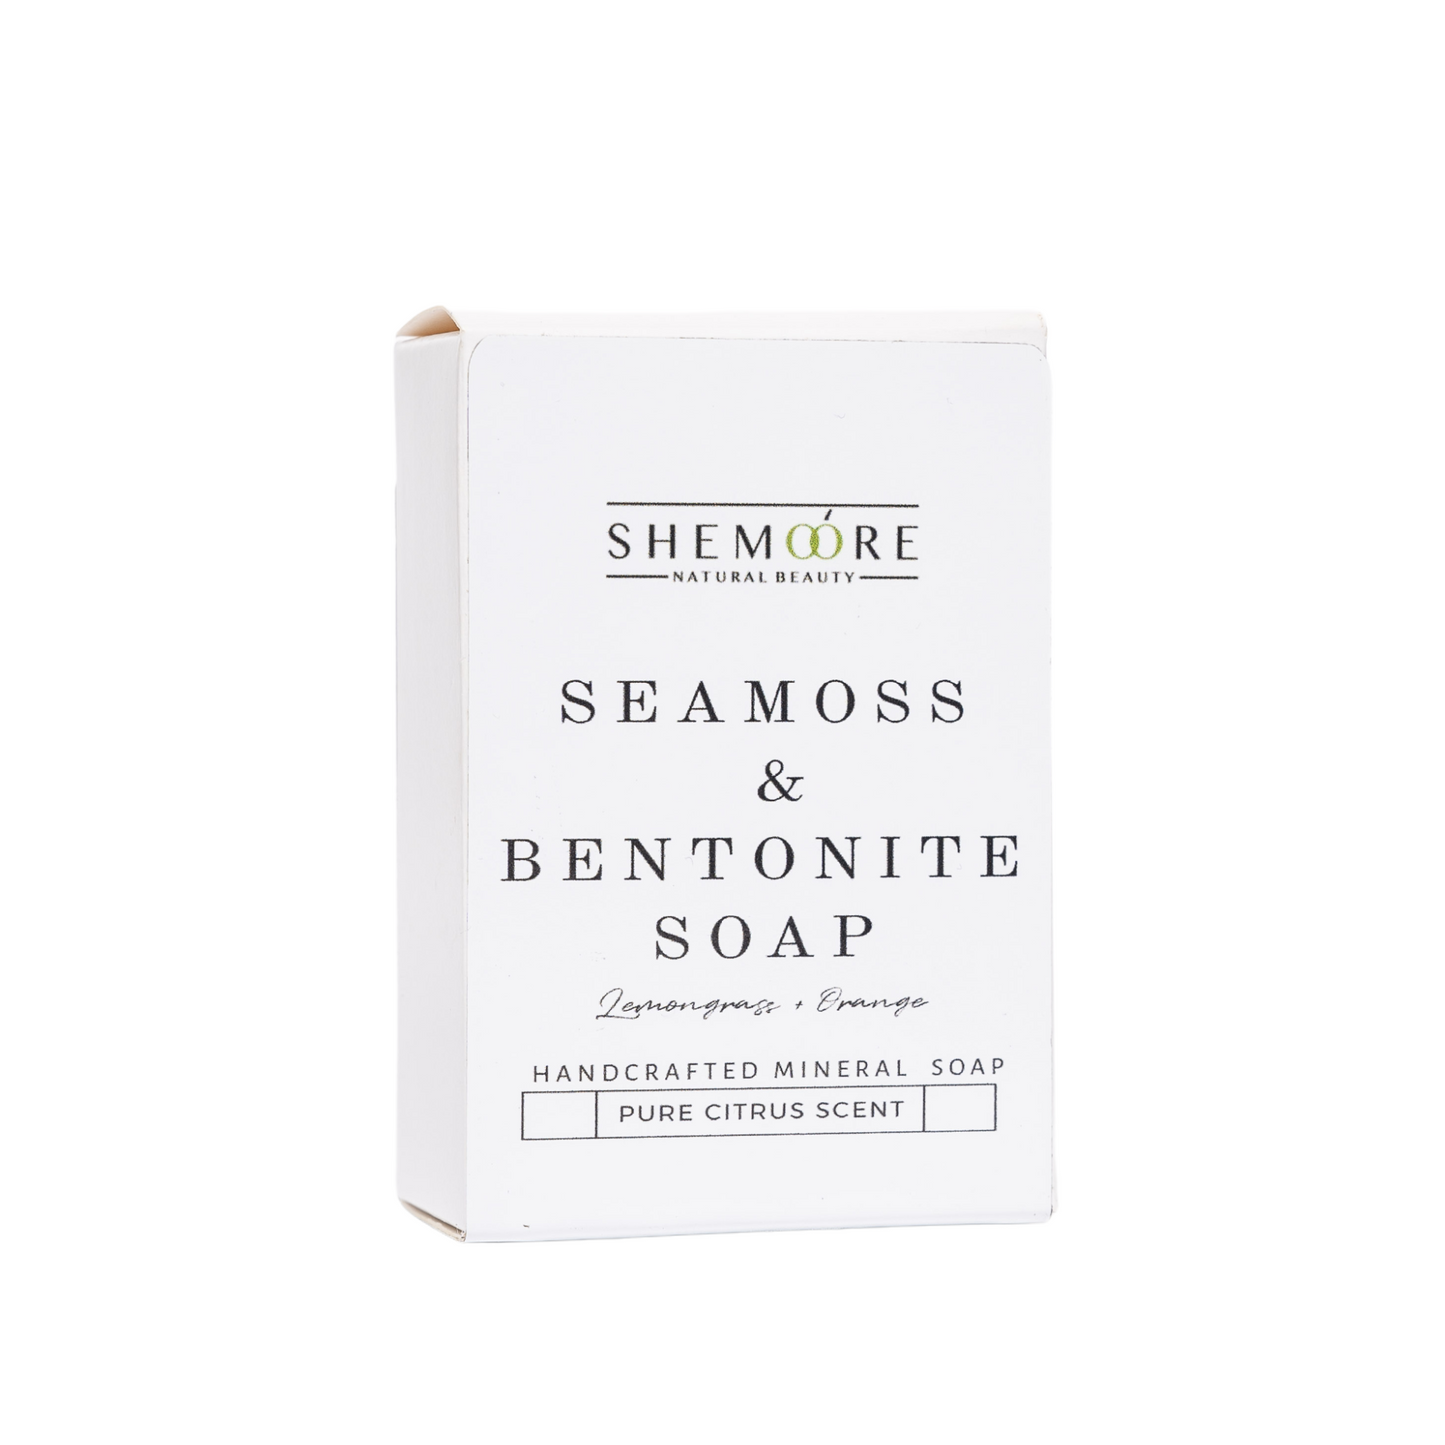 Bentonite Clay & Sea Moss soap bar